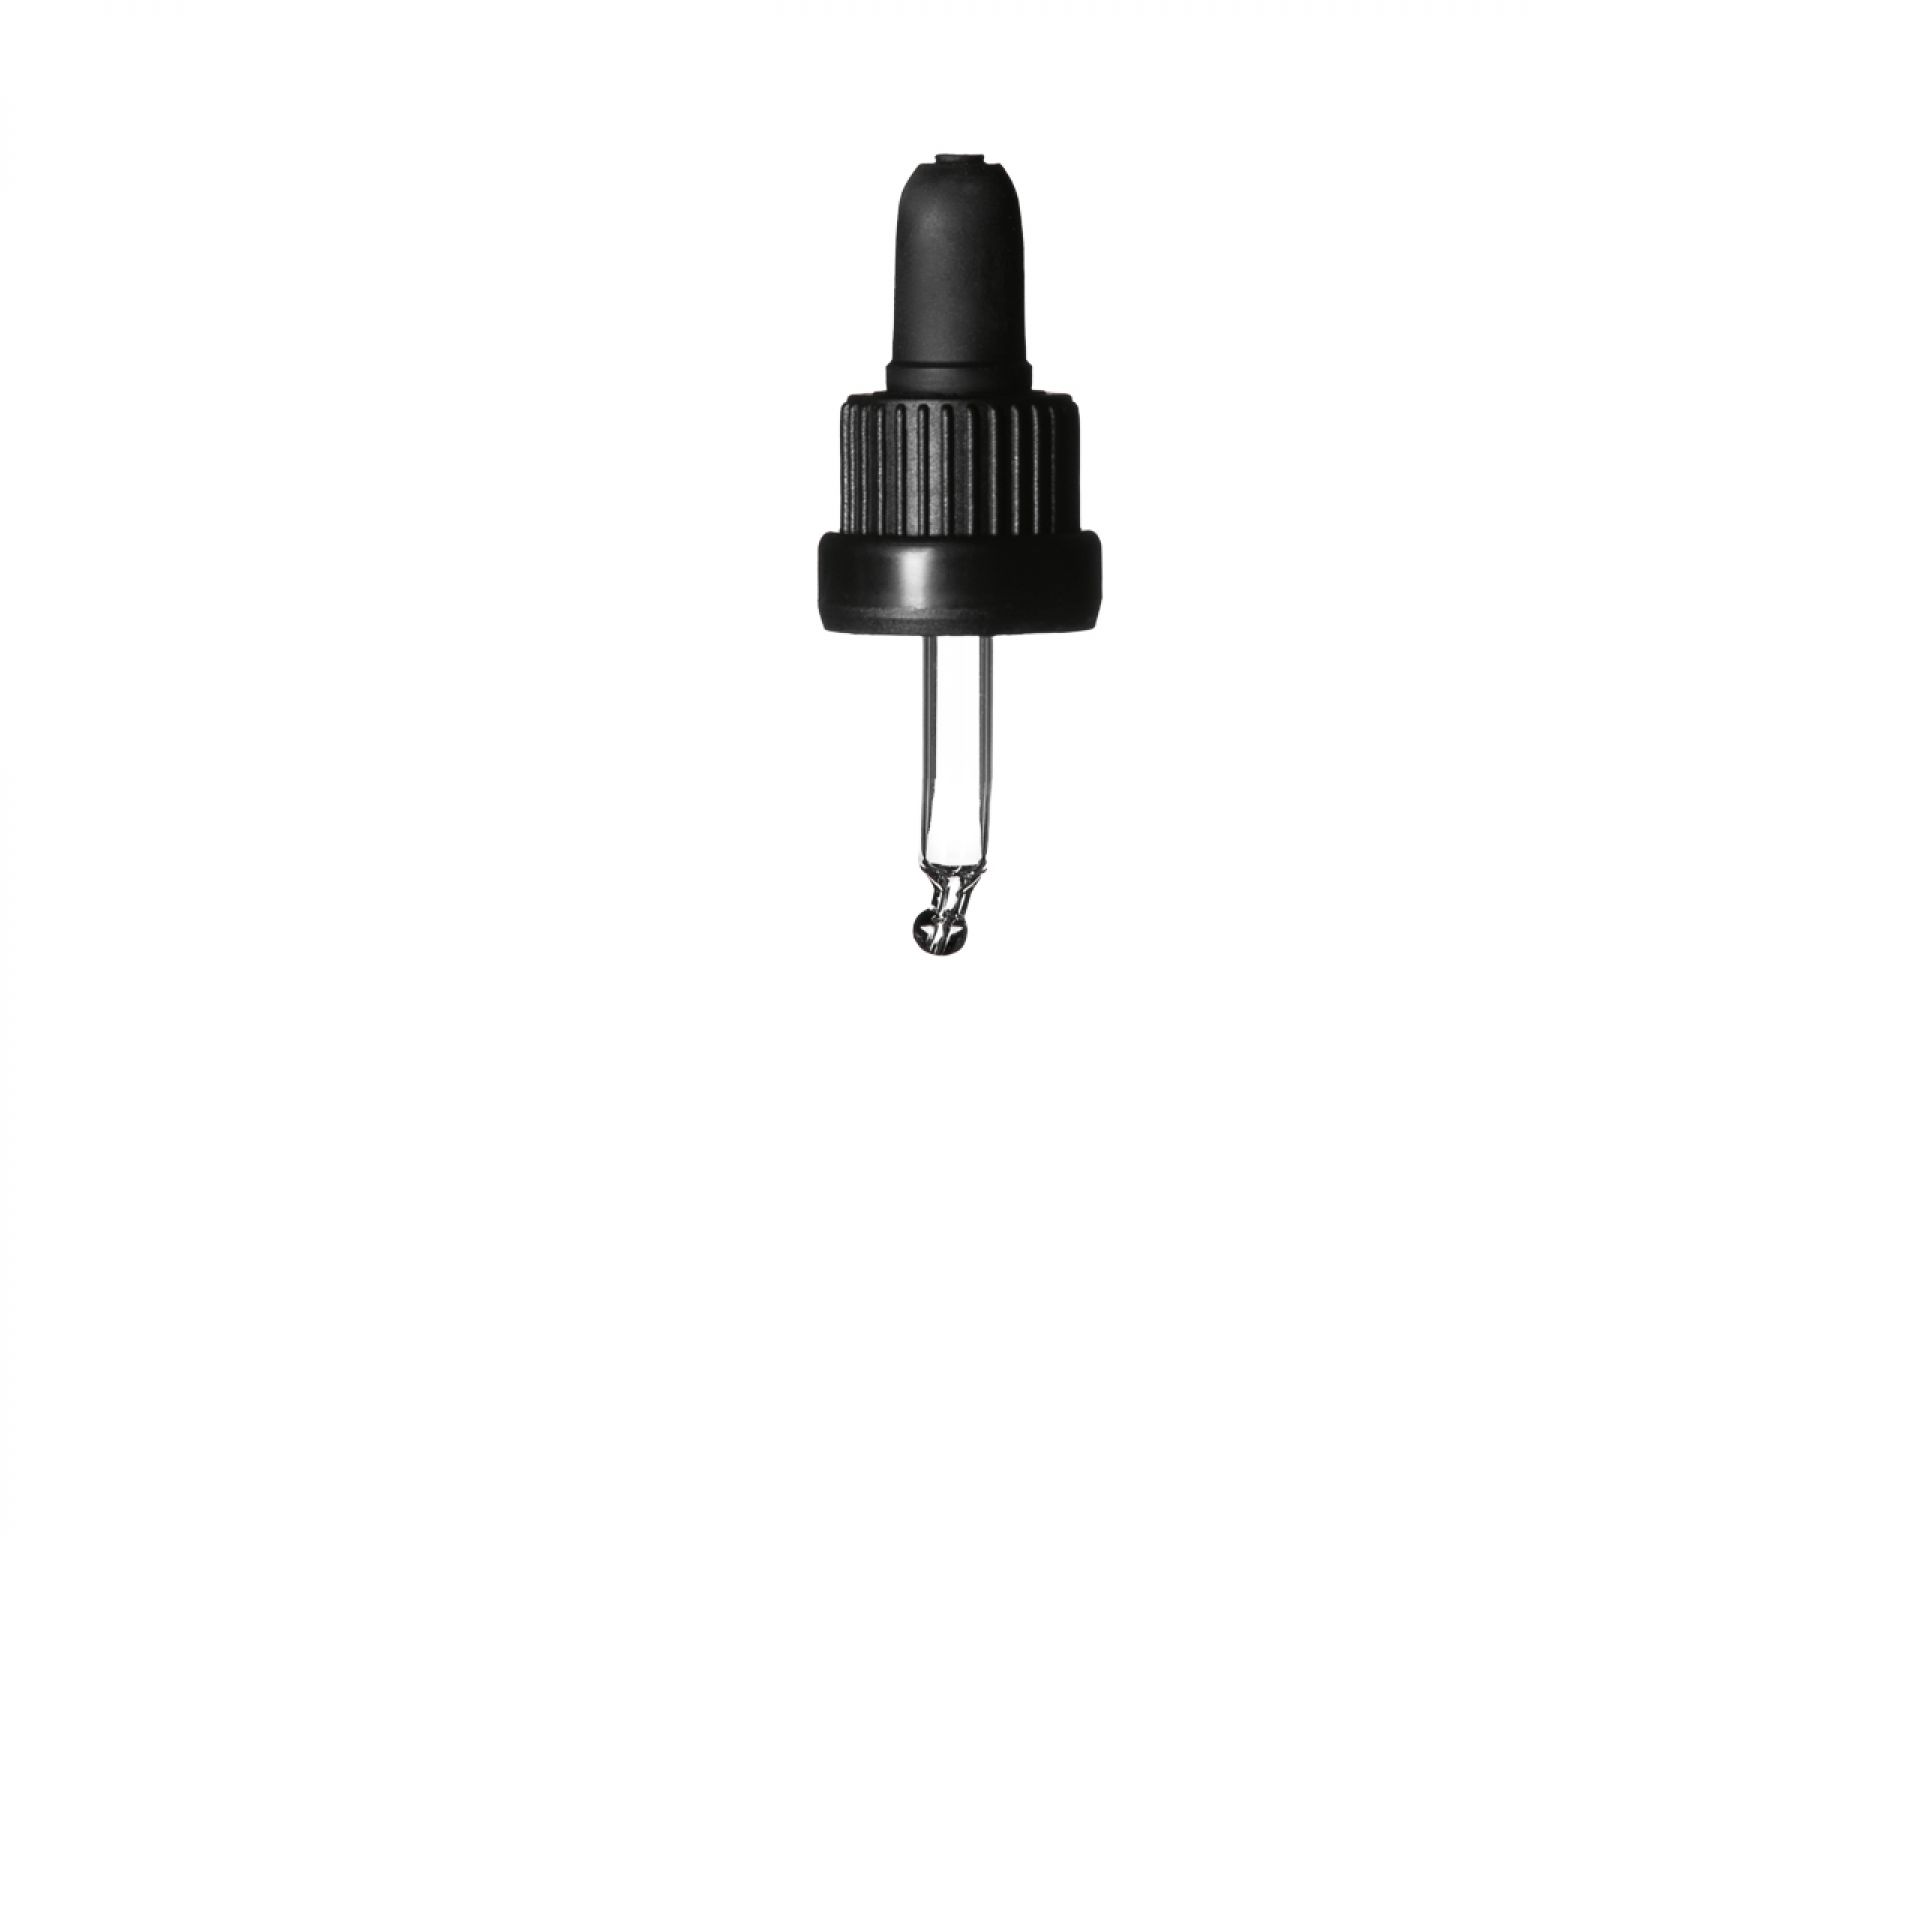 Pipette tamper evident DIN18, III, black, ribbed, bulb TPE, dose 0.7ml, bent ball tip (Orion 5)